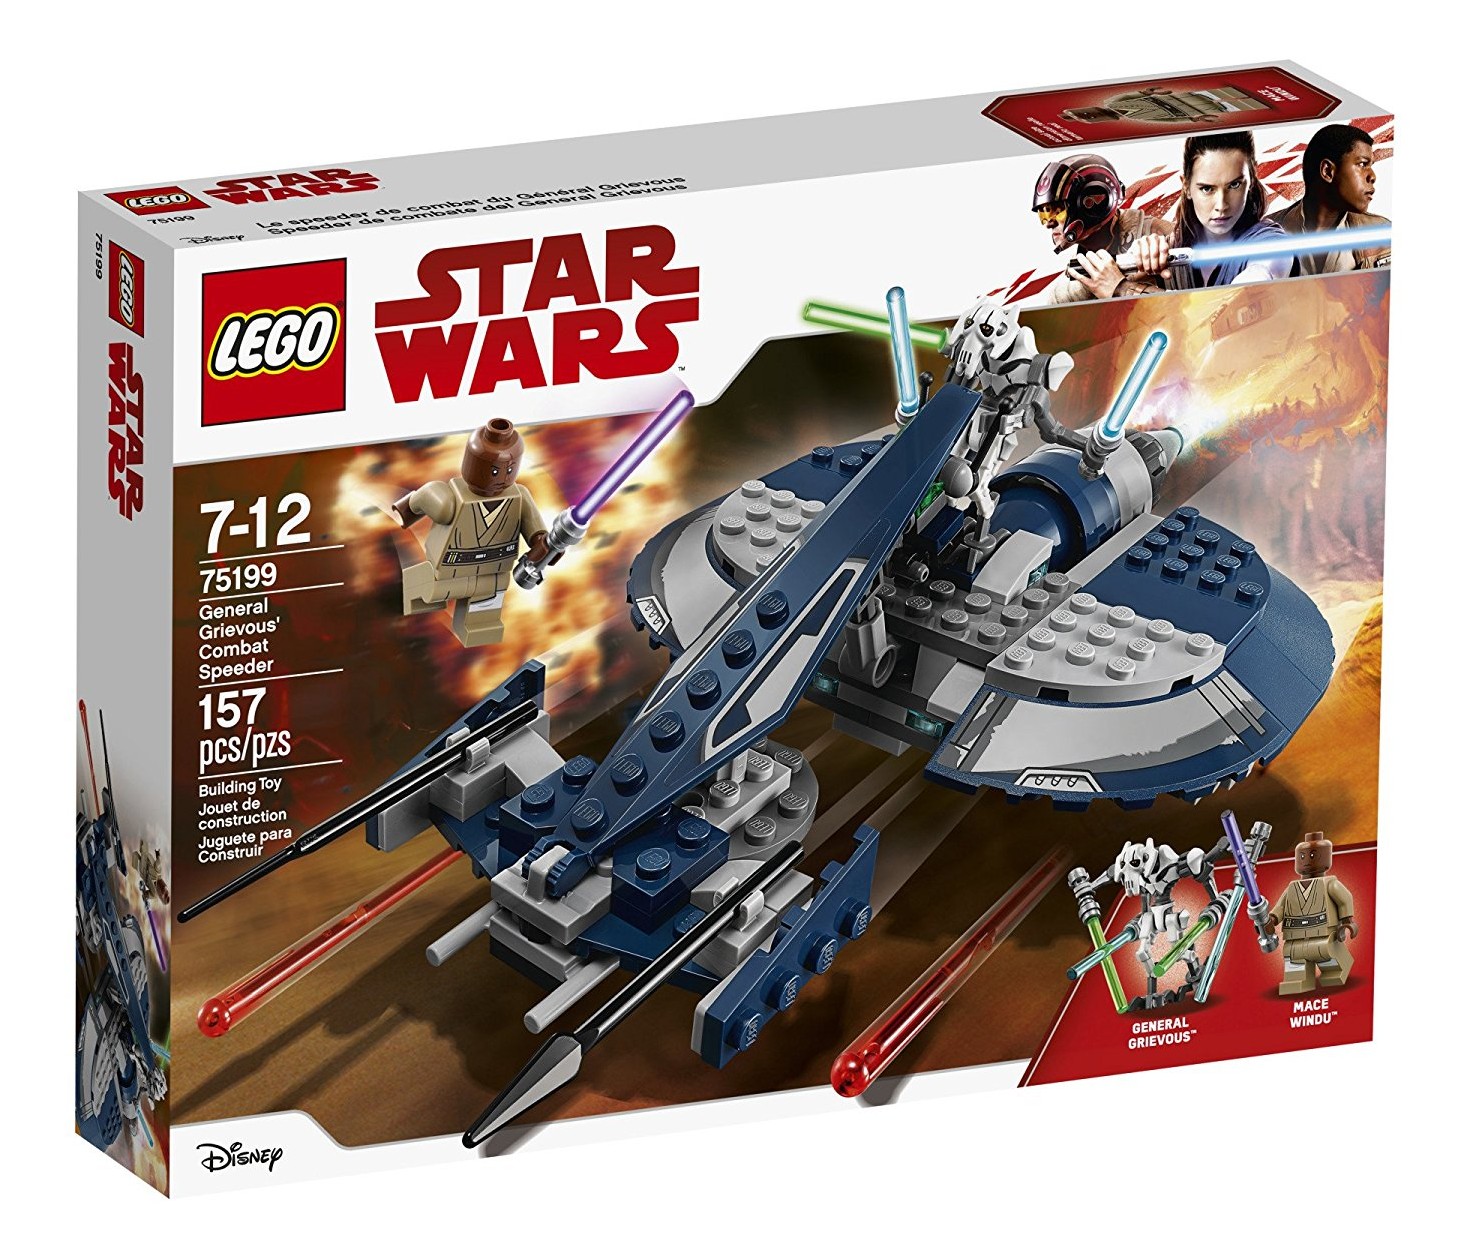 TLJ General Grievous' Combat Speeder Lego Set 1